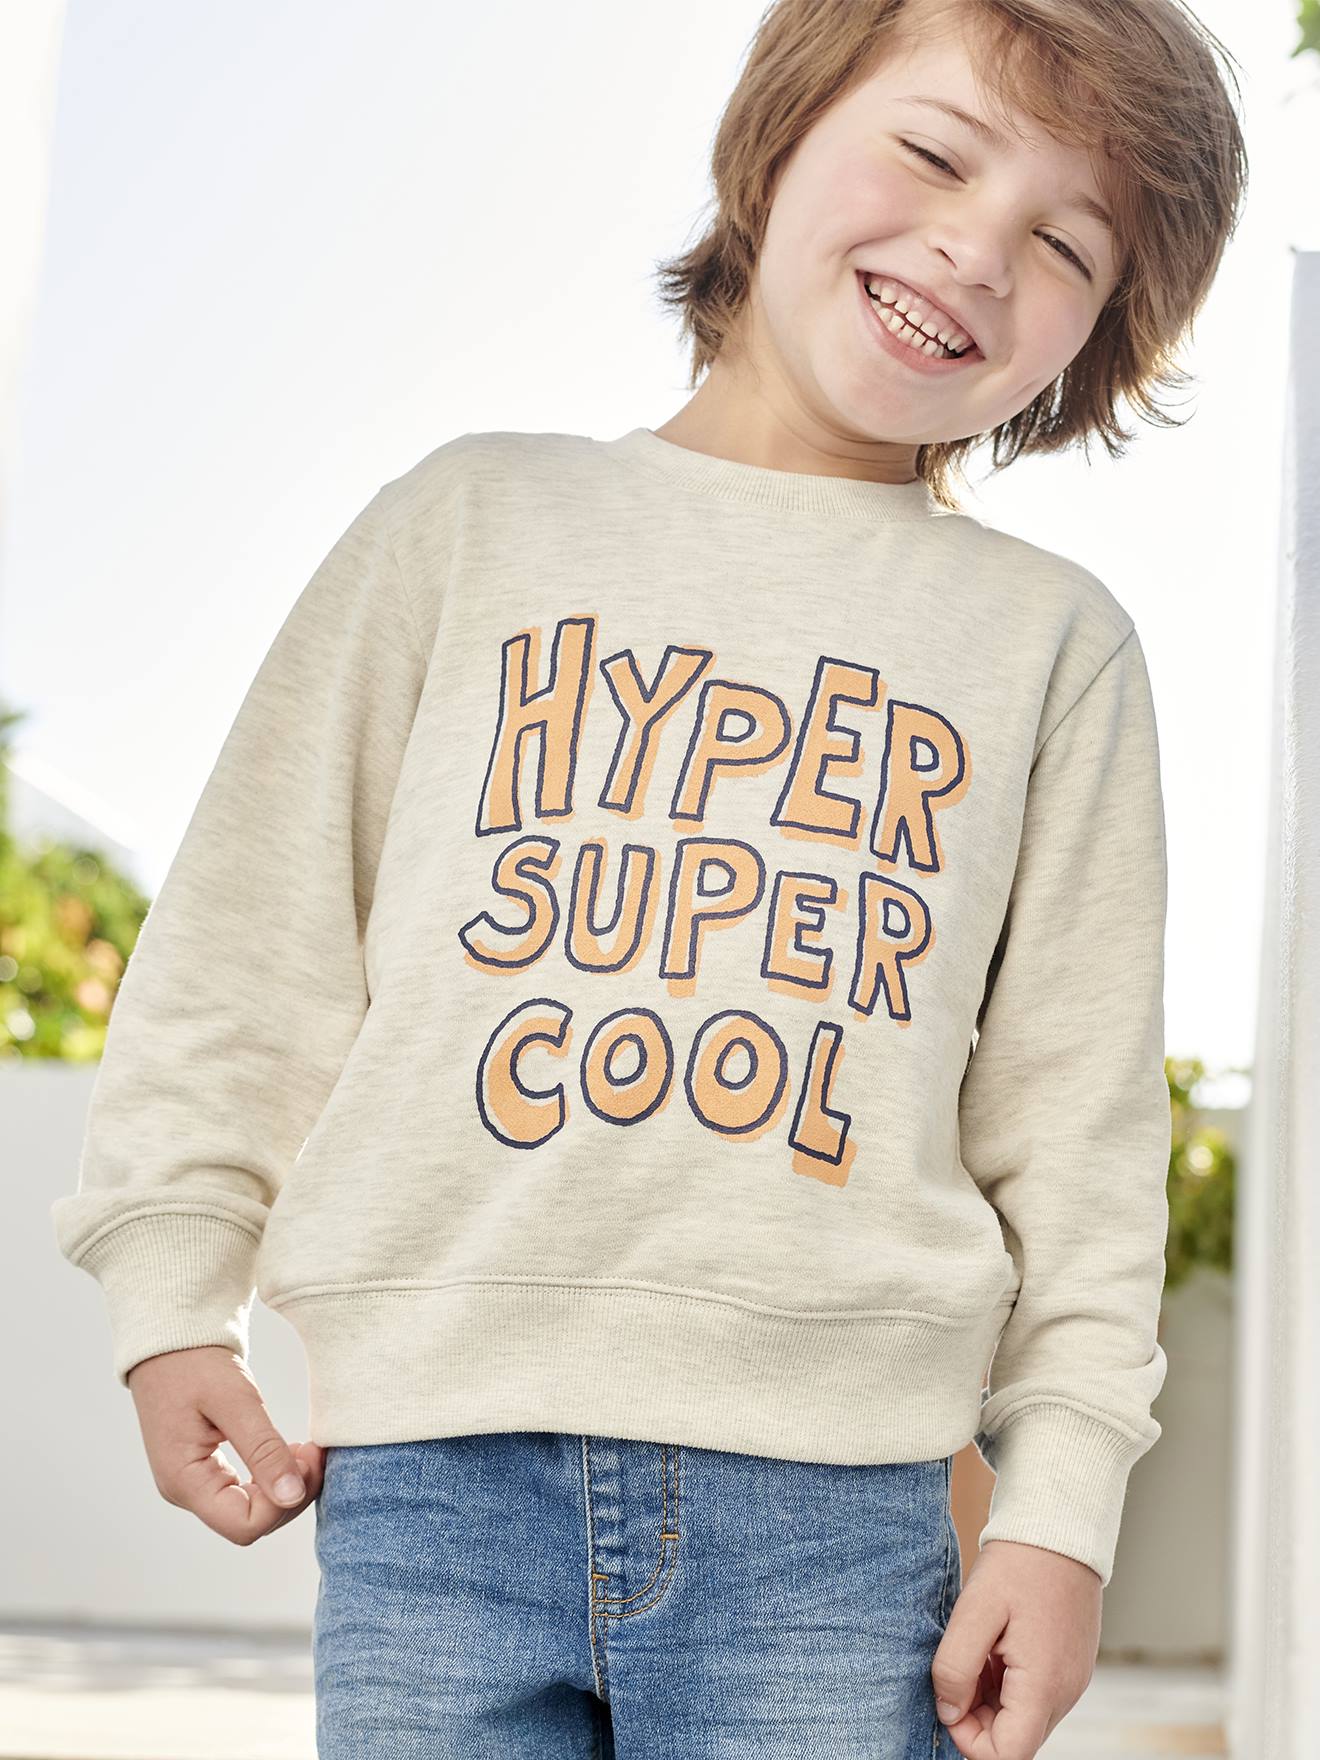 Basics Sweatshirt with Graphic Motif for Boys marl beige